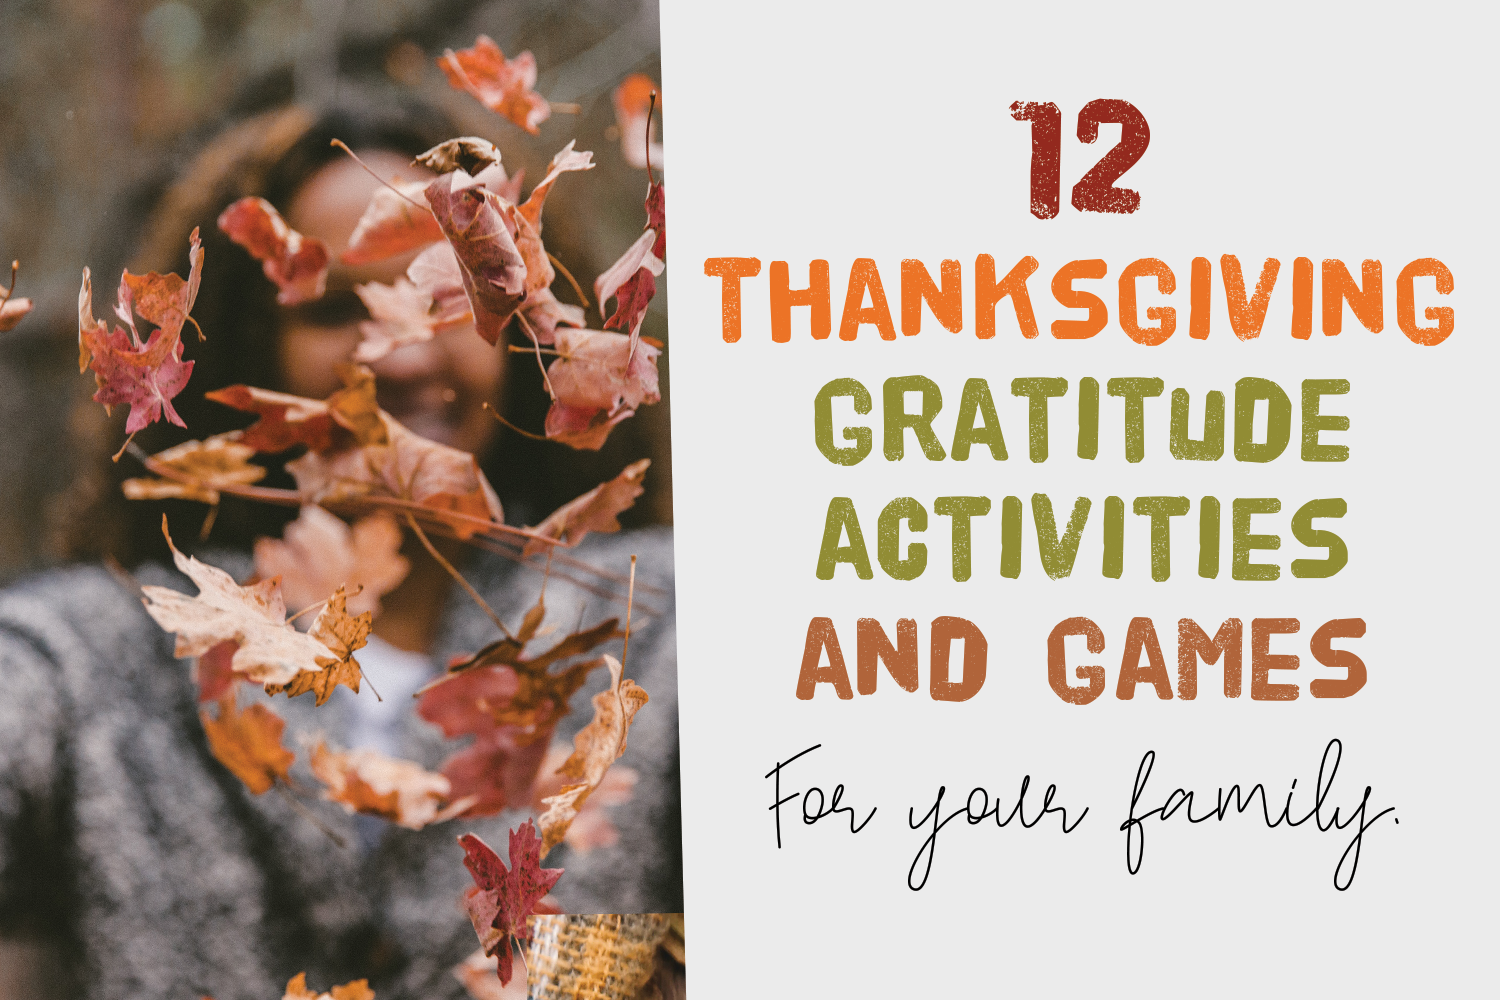 Gratitude Activities for Adults